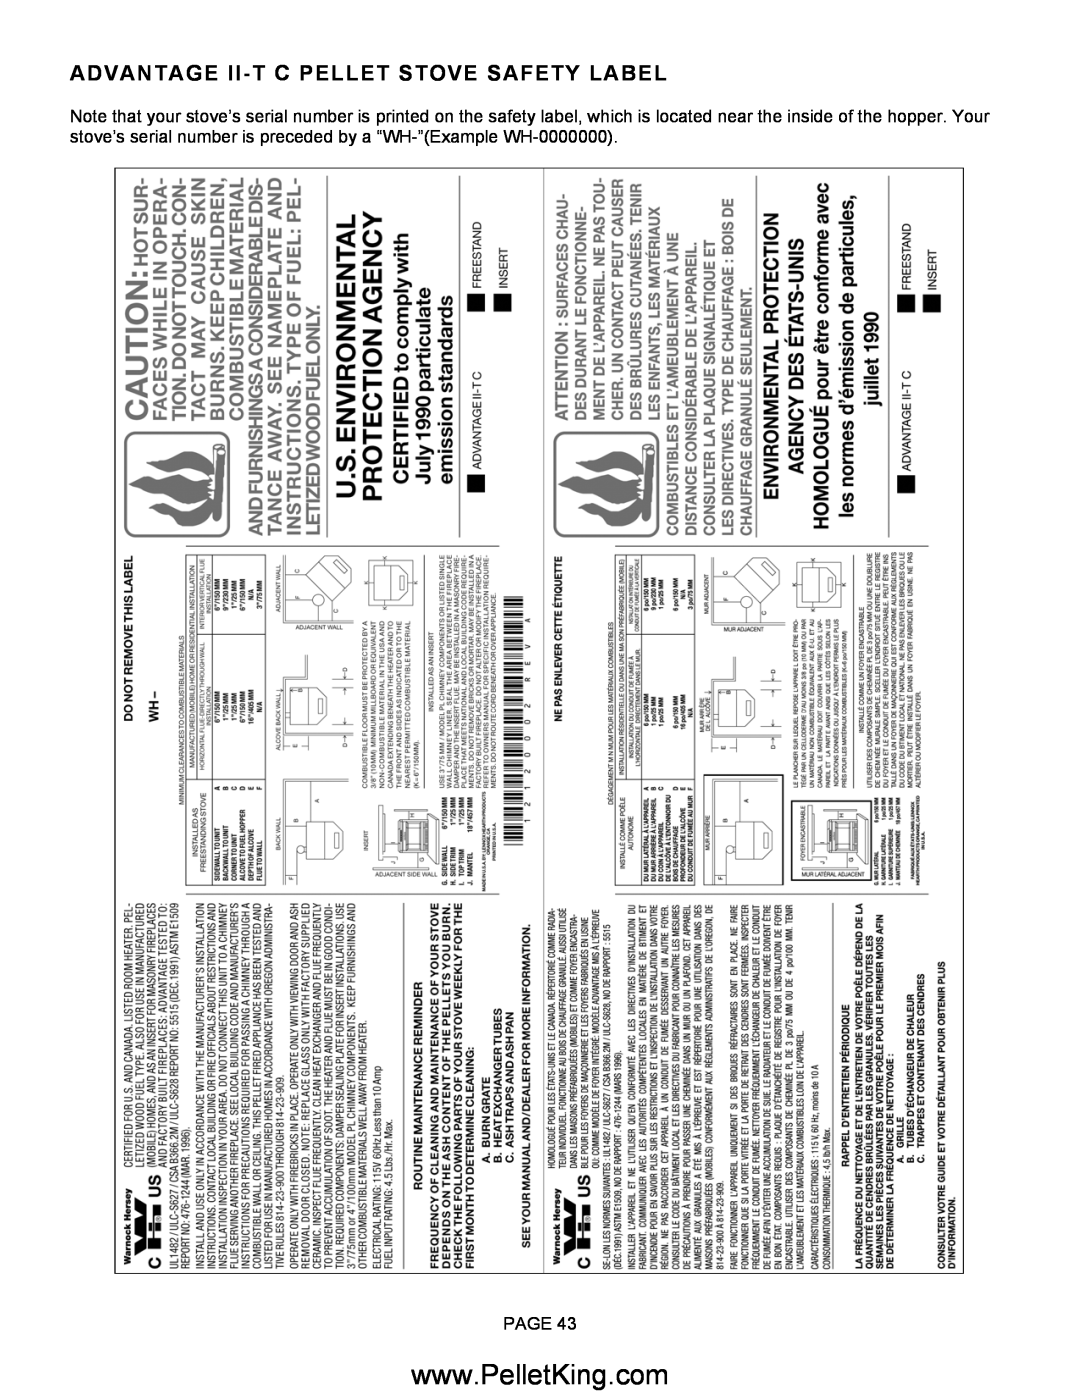 Lennox Hearth II-T C FS, II-T C INS operation manual Advantage Ii-Tc Pellet Stove Safety Label, Page 